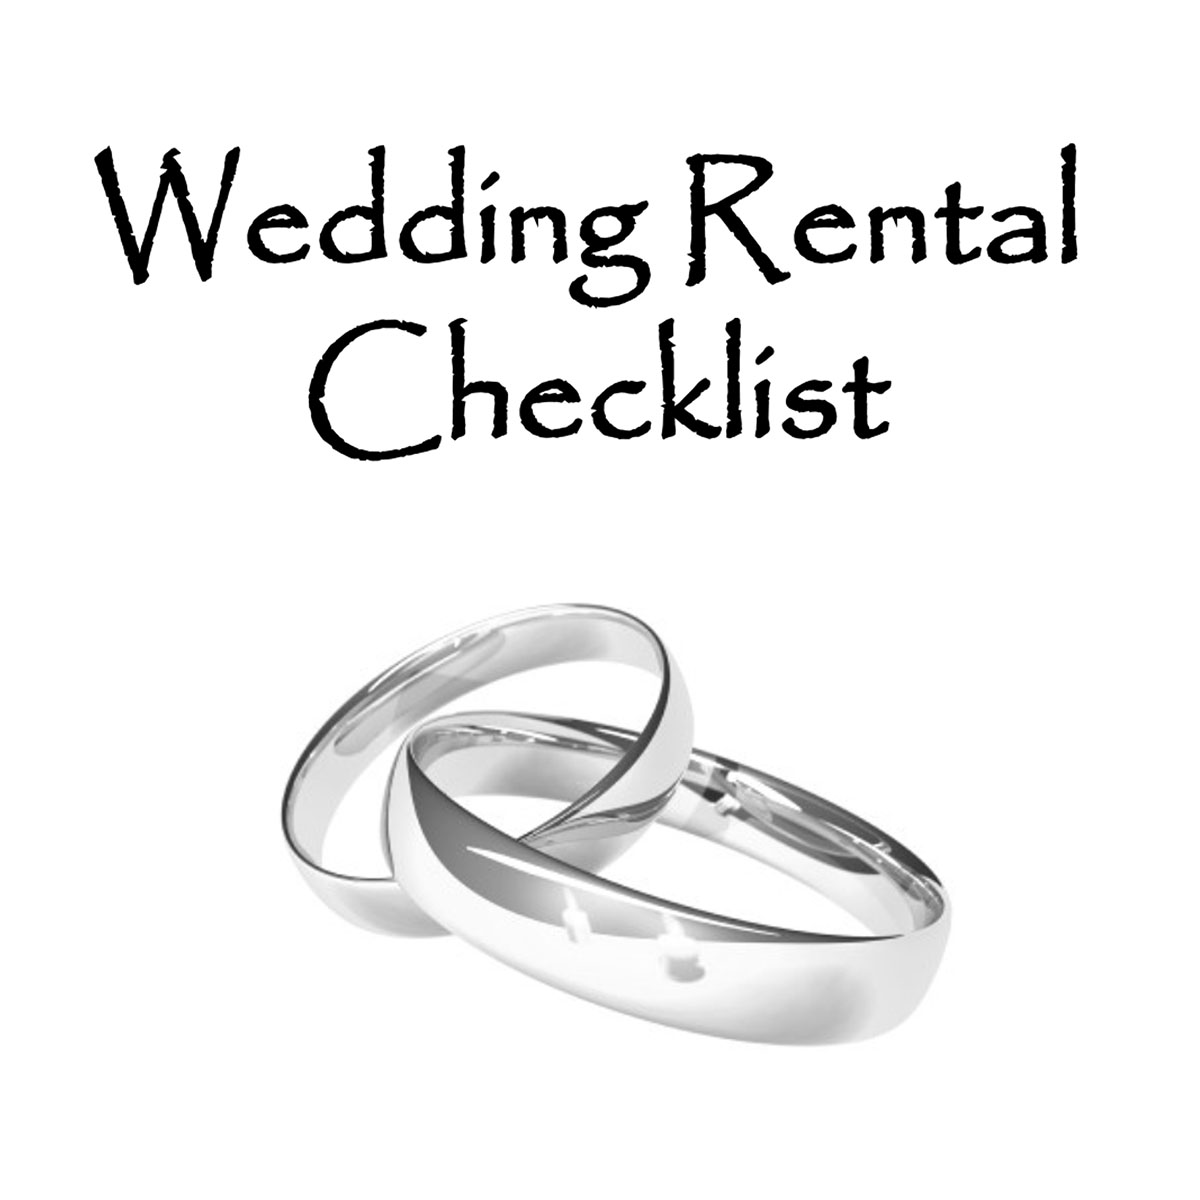 Wedding Rental Checklist